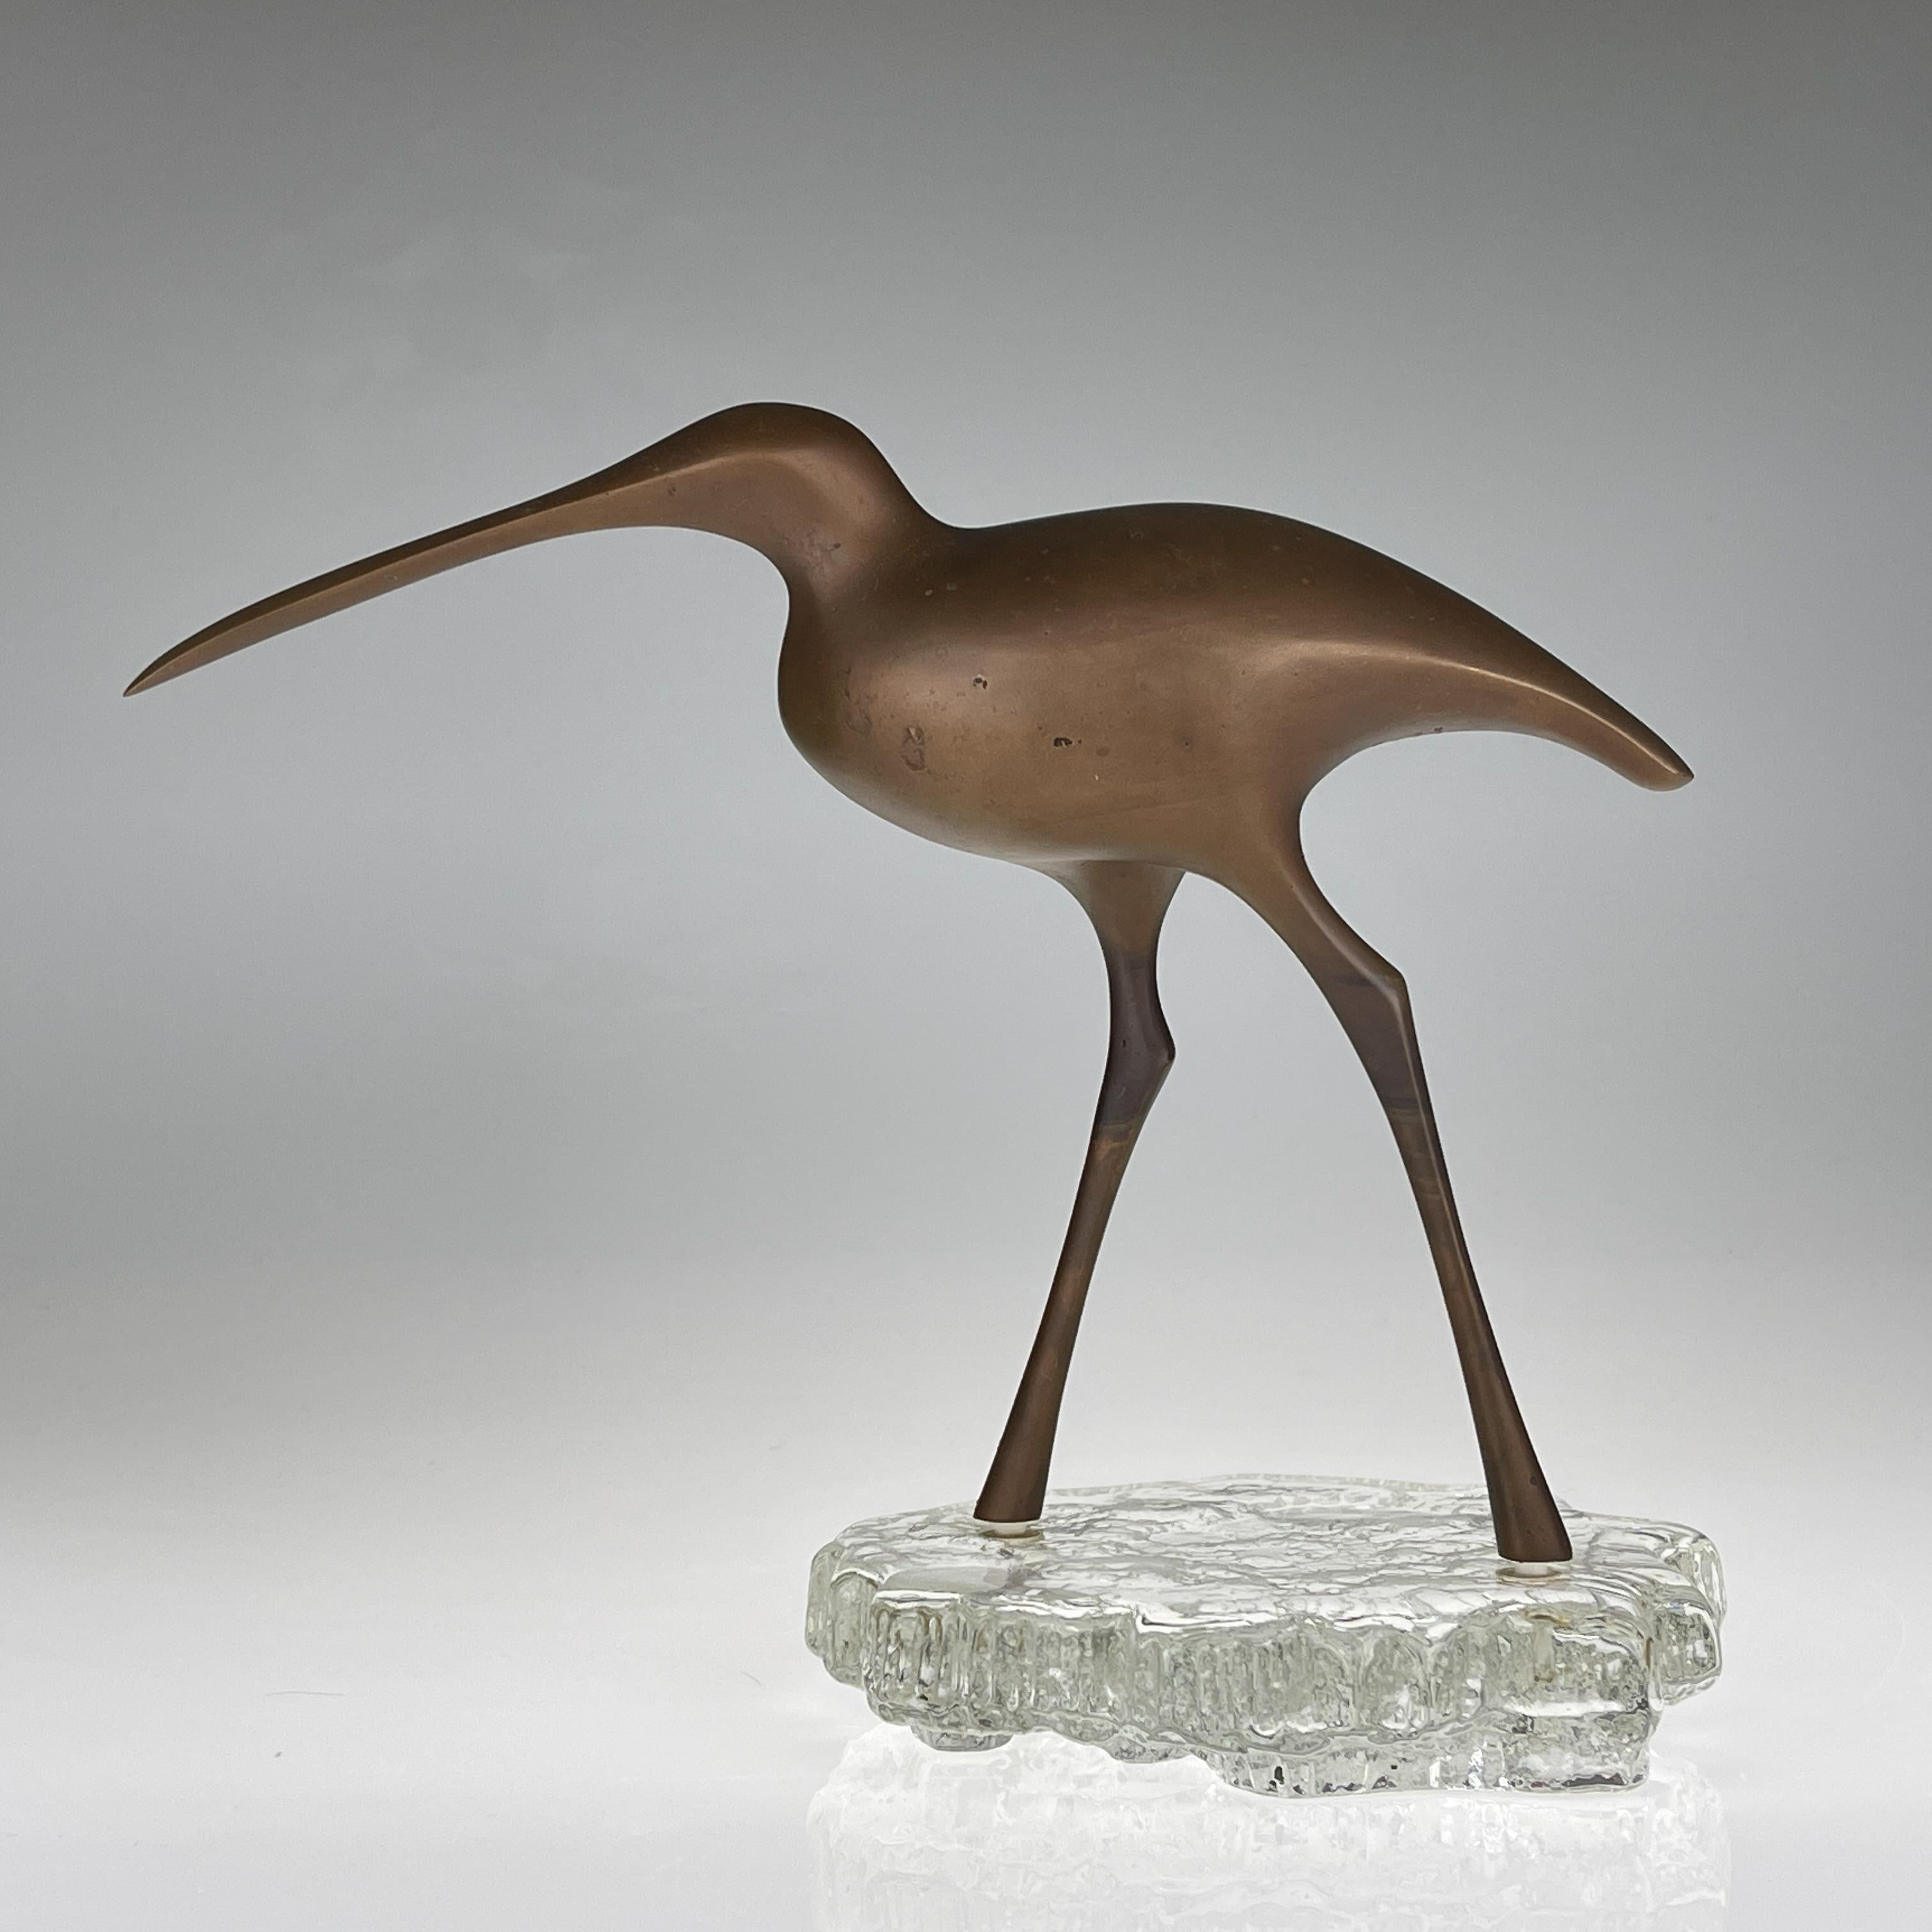 Hand-Crafted Scandinavian Modern Tapio Wirkkala Patinated Bronze Birdsculpture on Glass Stand